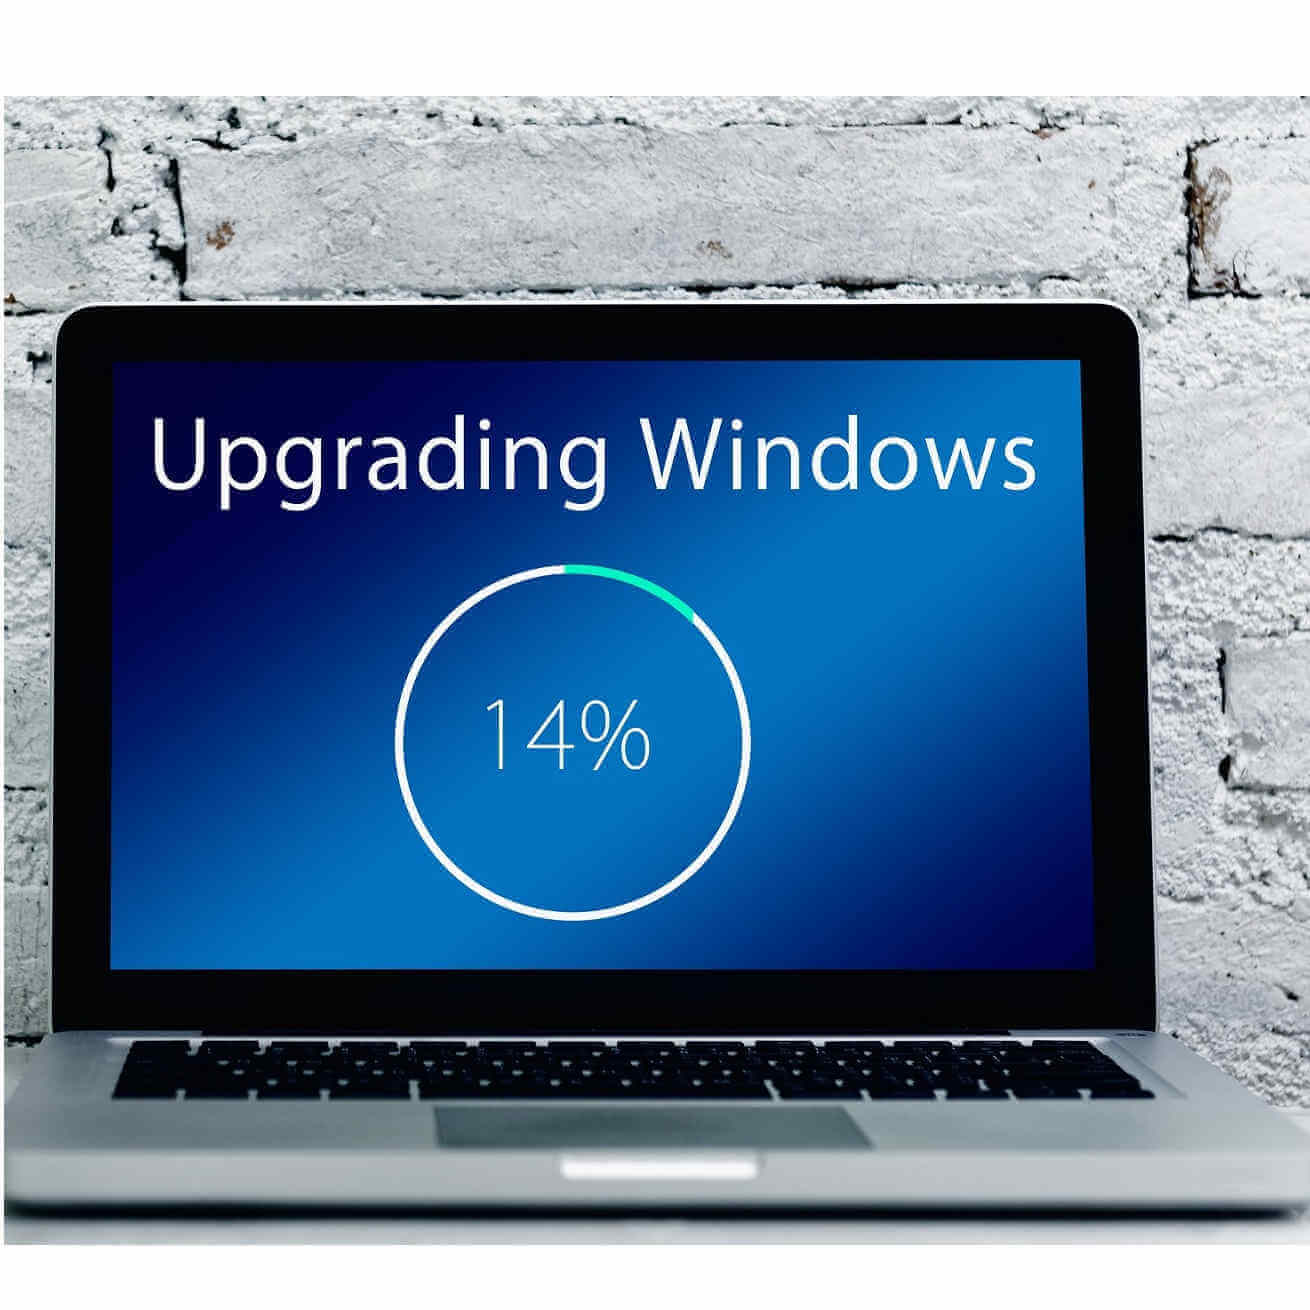 Recent Windows 10 cumulative updates create device startup issues